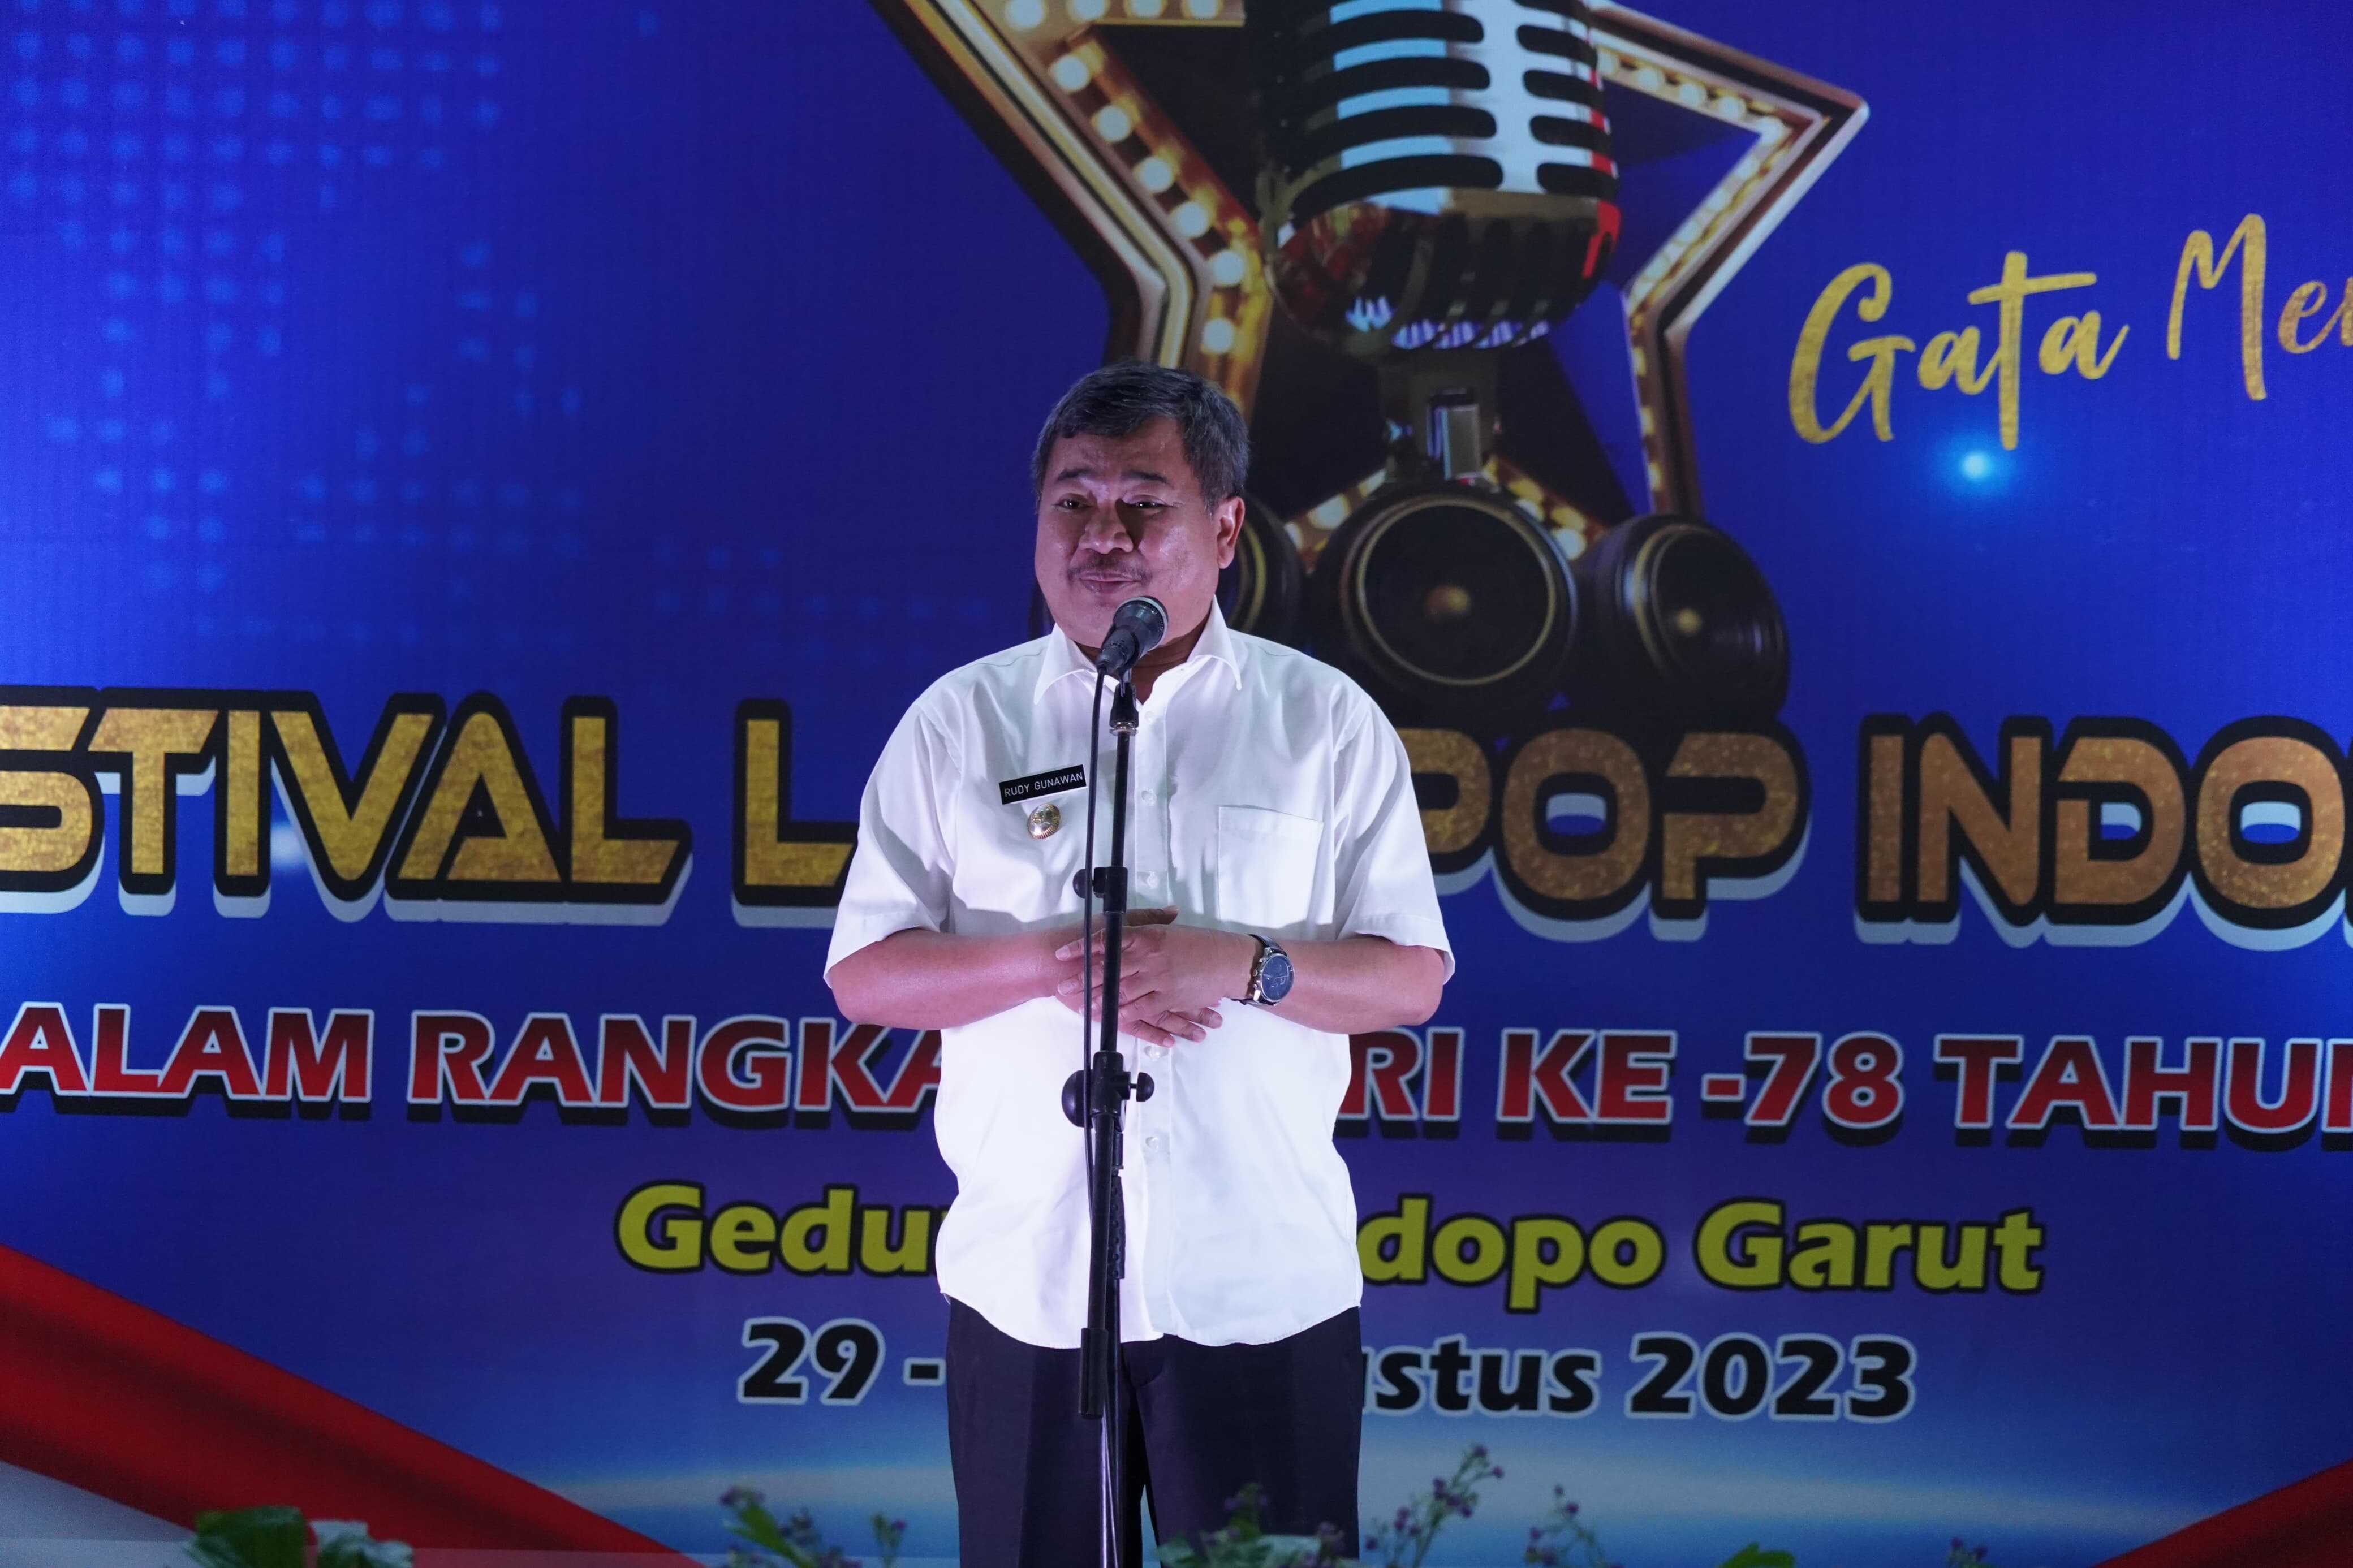 Forum Lurah dan Kecamatan Garut Kota Sukses Menggelar Festival Lagu Pop Indonesia